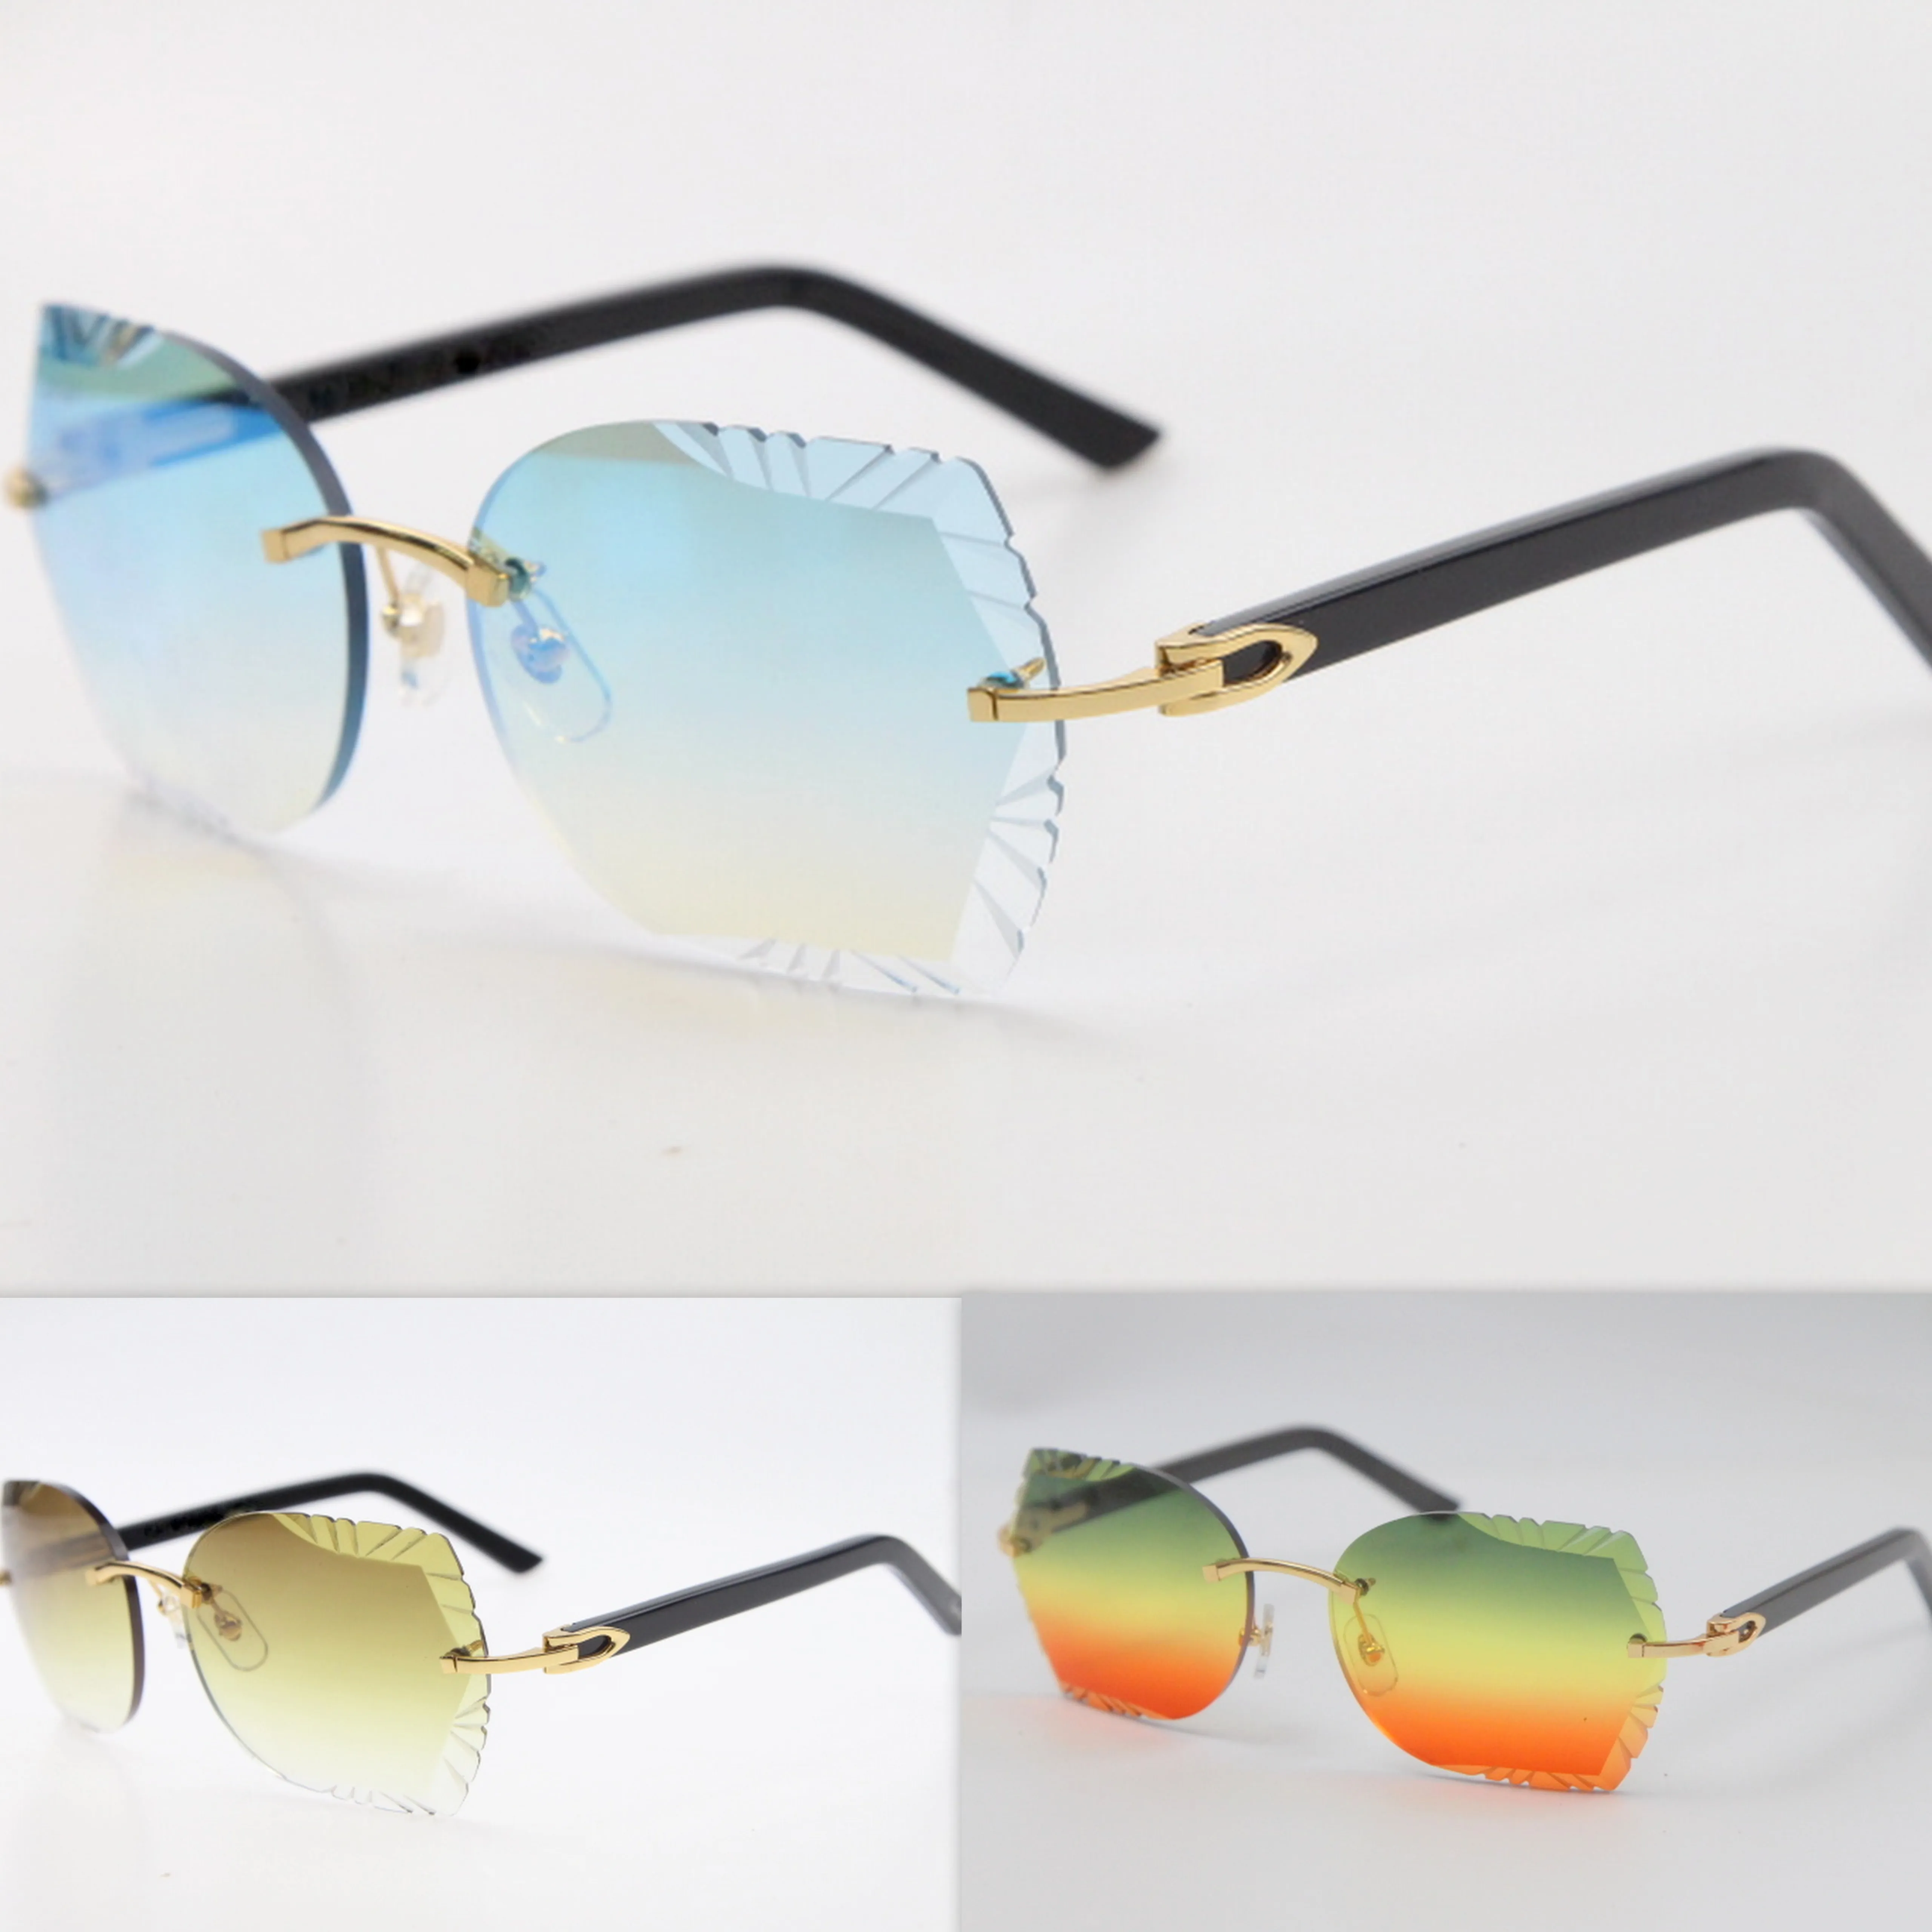 3 0 Thick Carved Lens Sunglasses Rimless Metal Mix Aztec Black Plank Sun glasses Unisex Optical cat eye 18K Gold Frames UV400 Slim2375